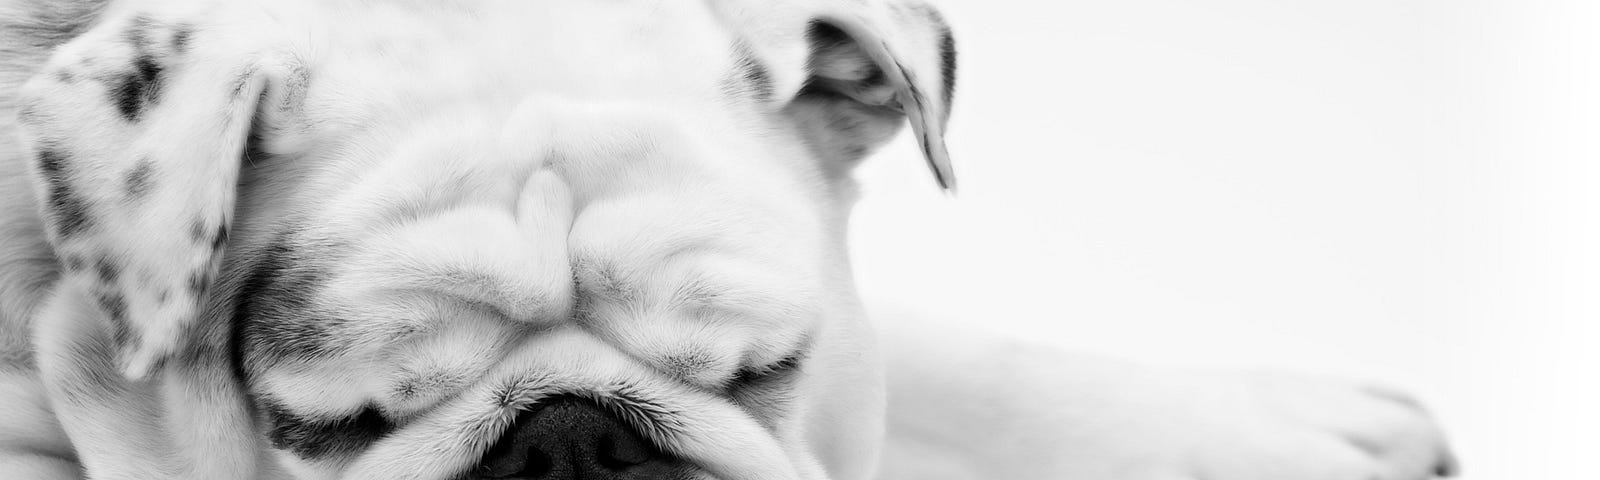 a sleeping white bull dog